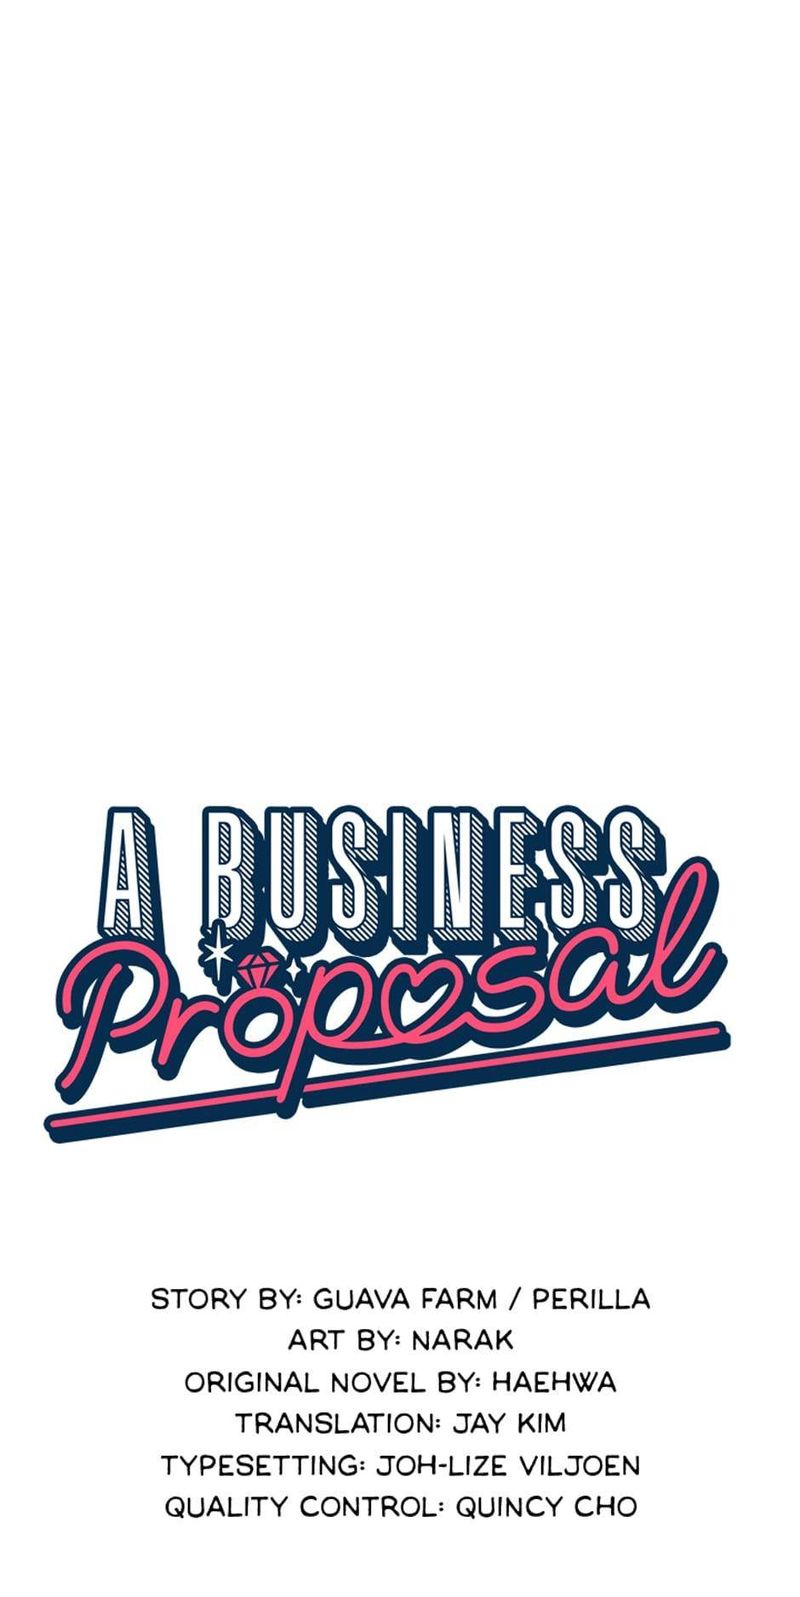 A Business Proposal 18 31